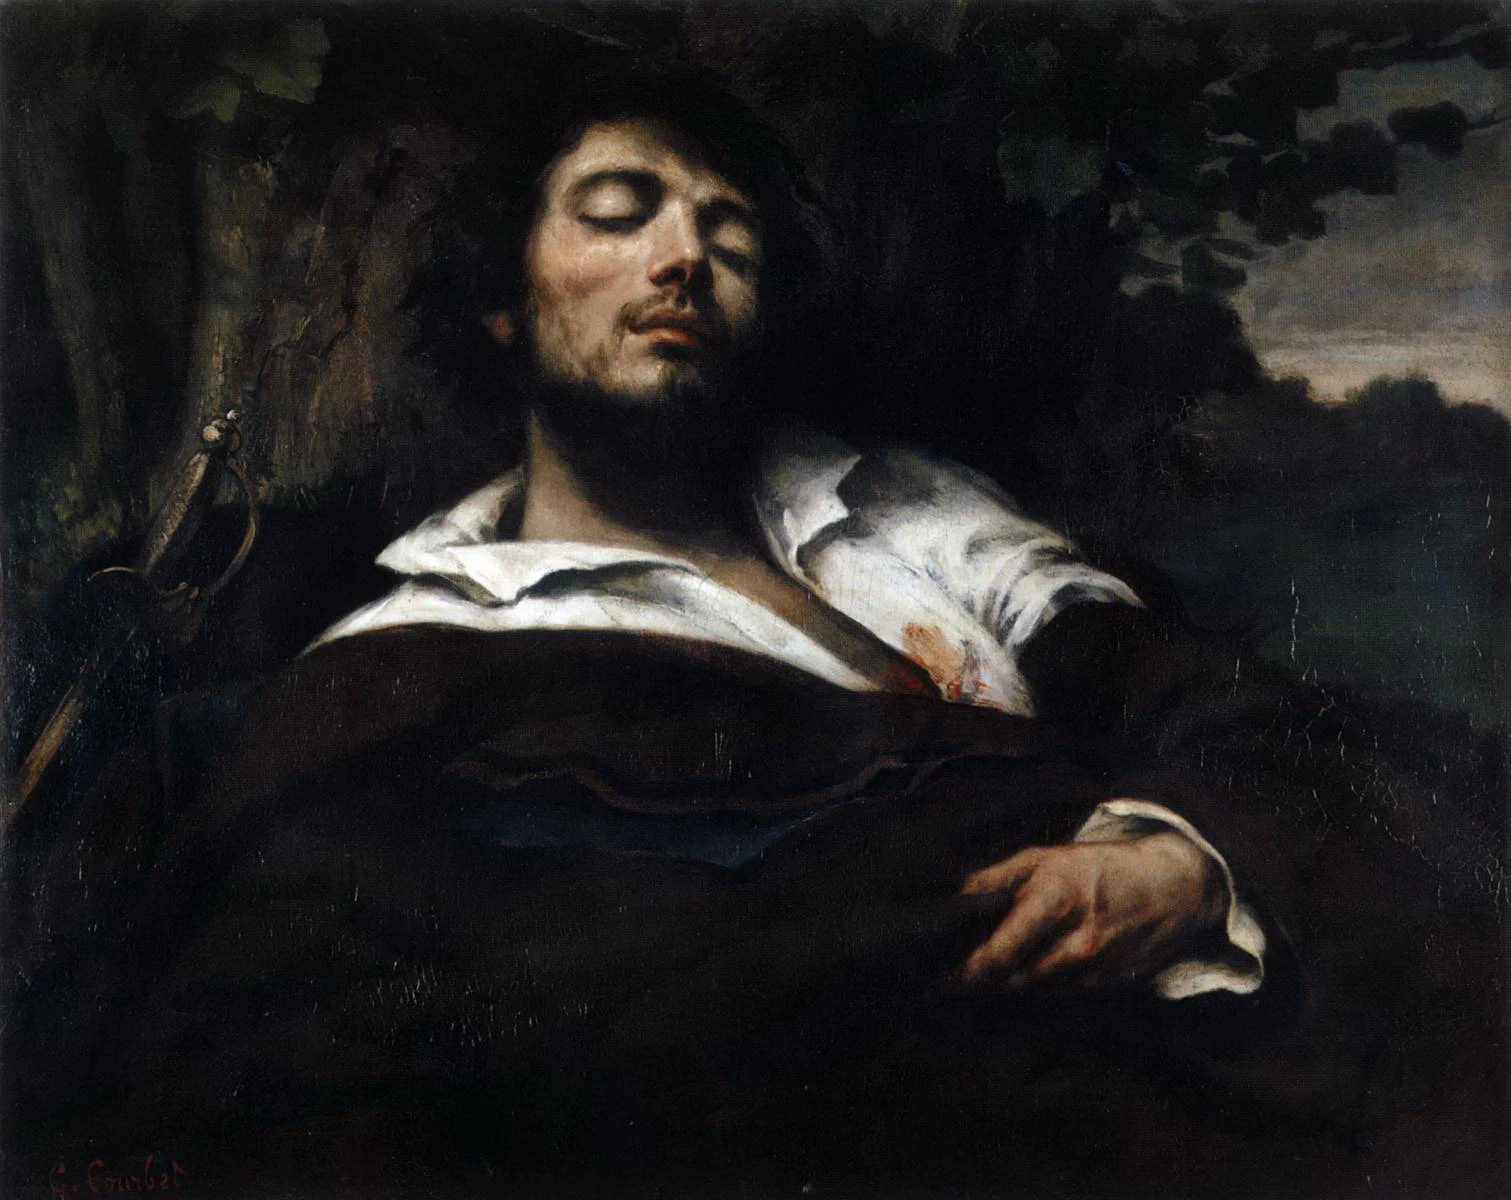   294-Uomo ferito-Musée d'Orsay, Paris